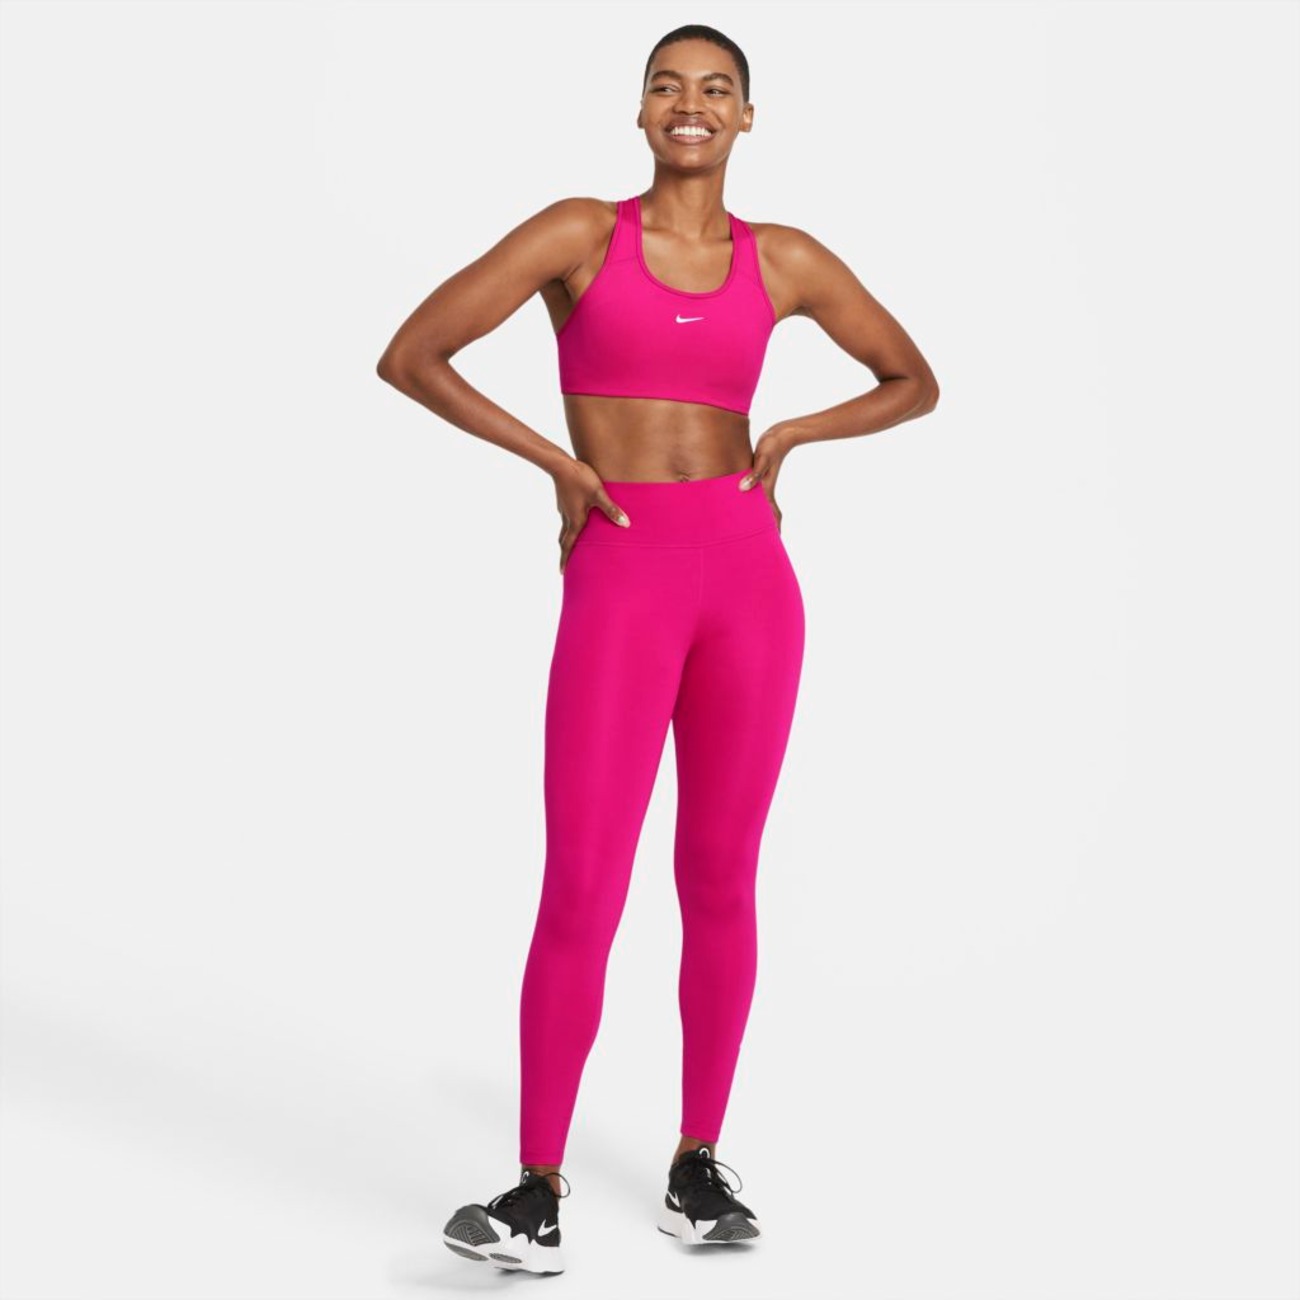 Calça Legging Nike Pro Dri-Fit Tght Mxny Feminina - Preta - Bayard